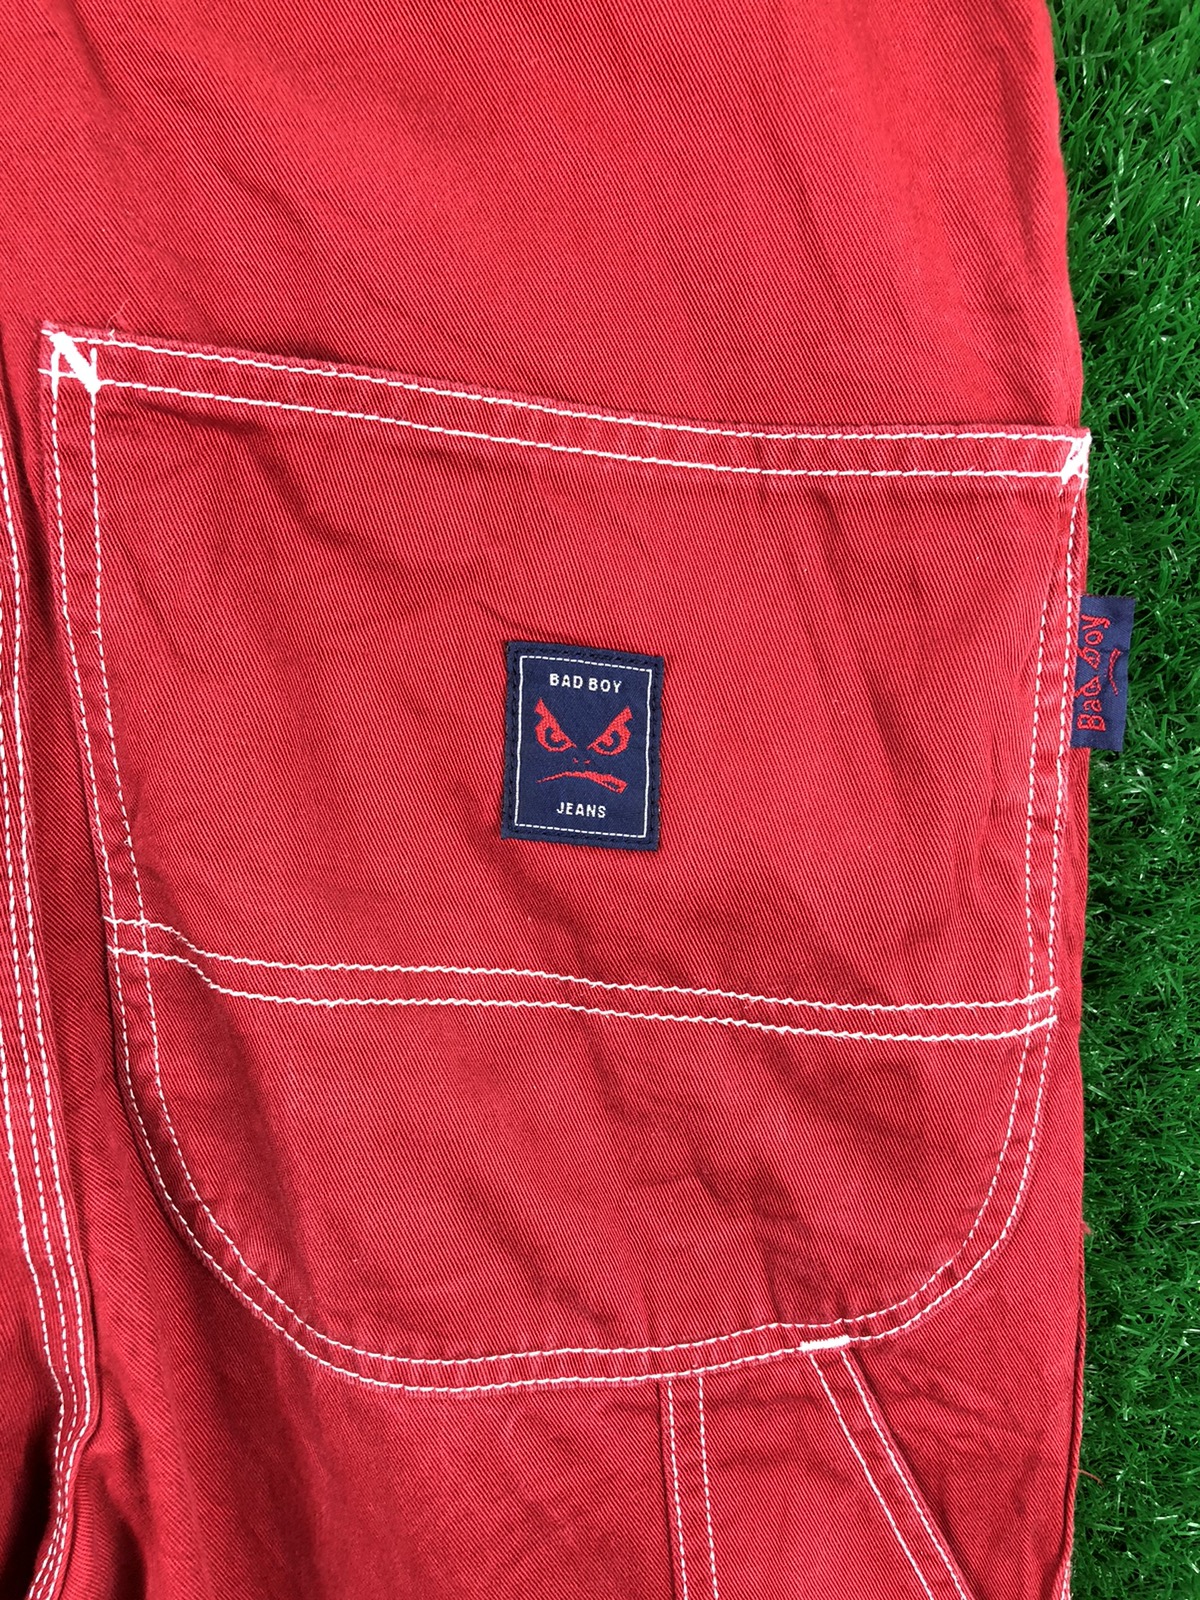 Vintage - Vintage 90's Bad Boy Jeans Red Overall Denim Workwear Style - 9